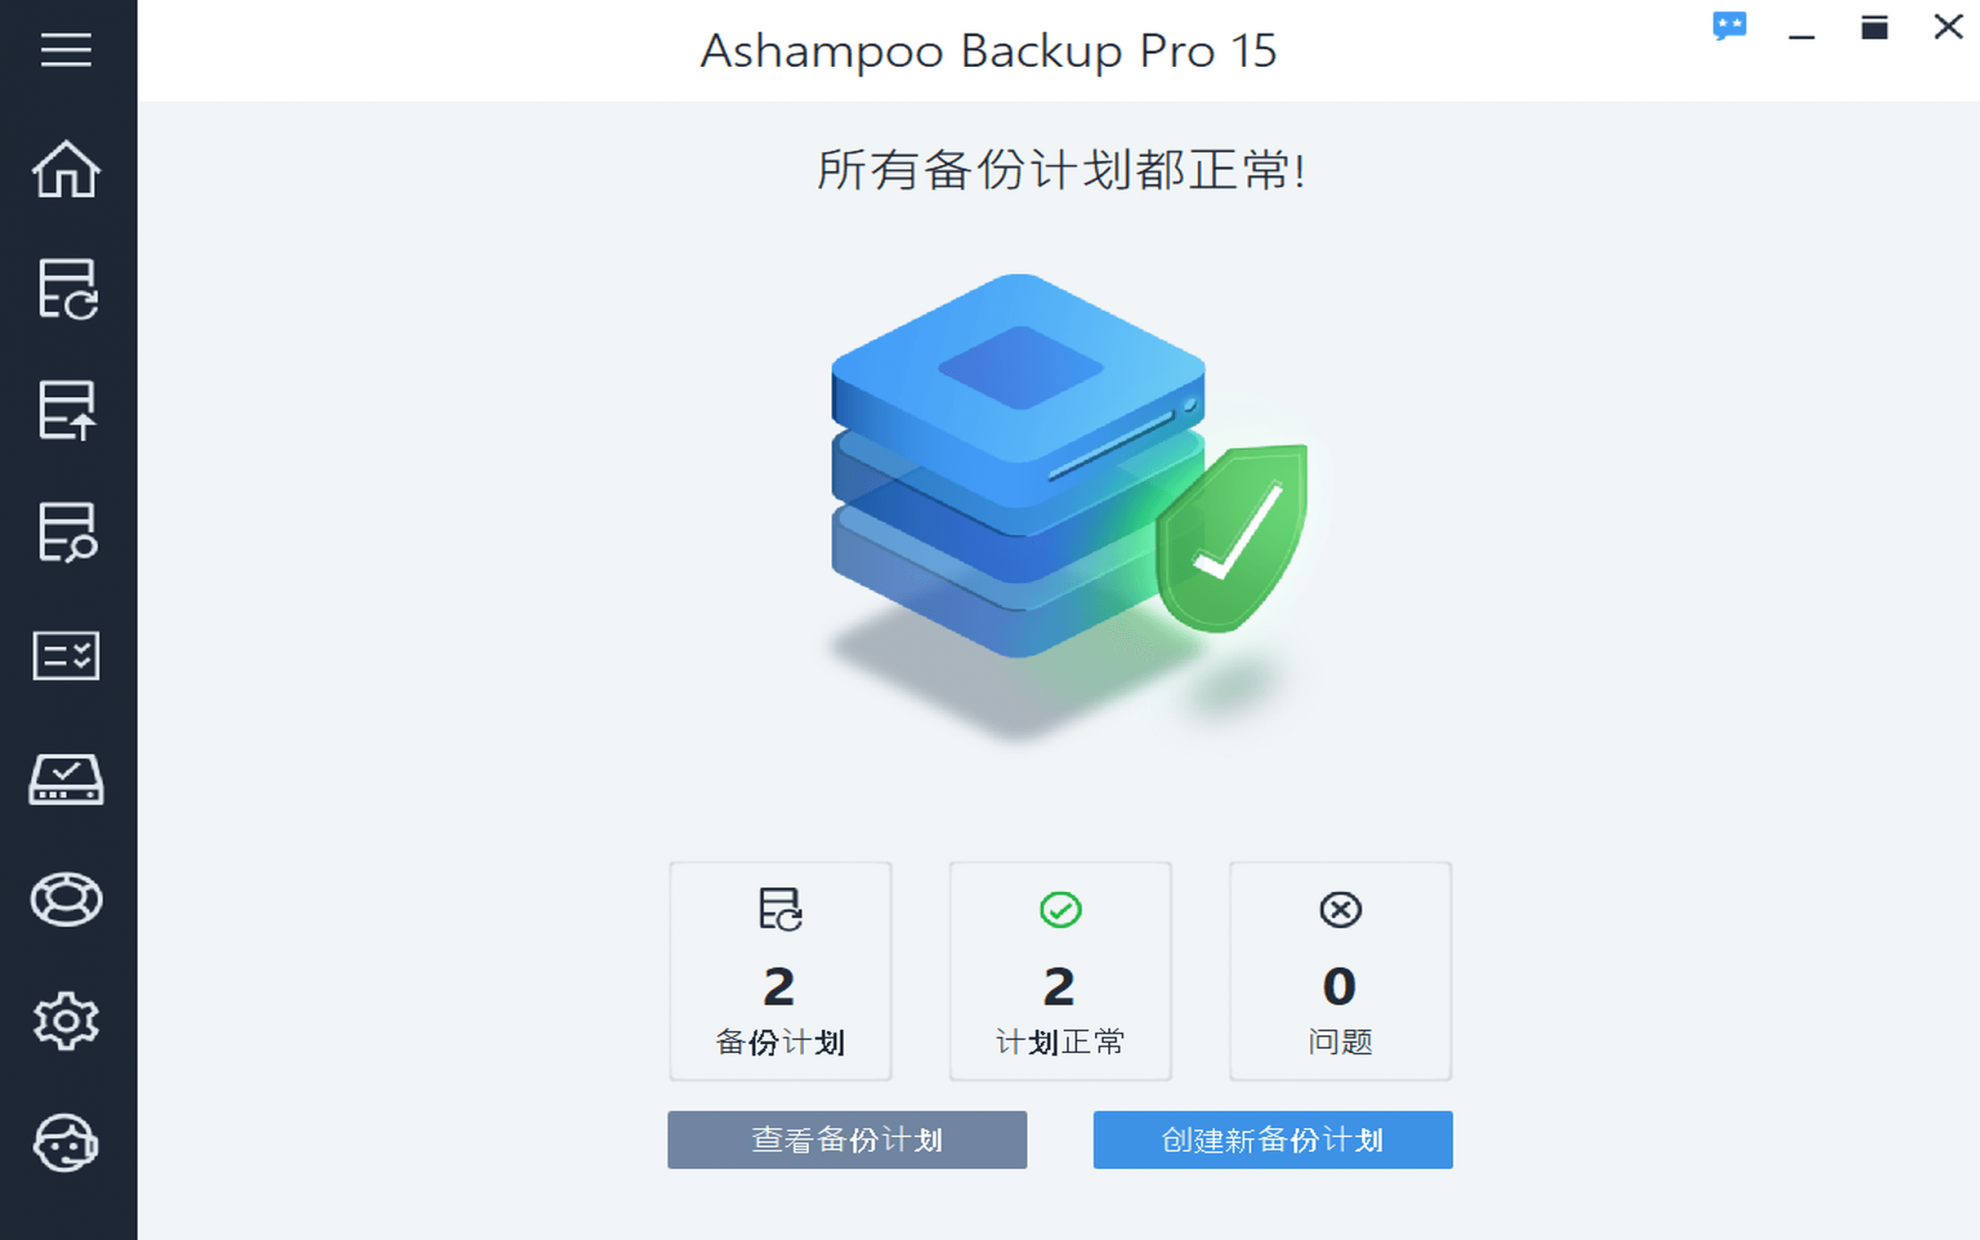 download the new version Ashampoo Backup Pro 17.07